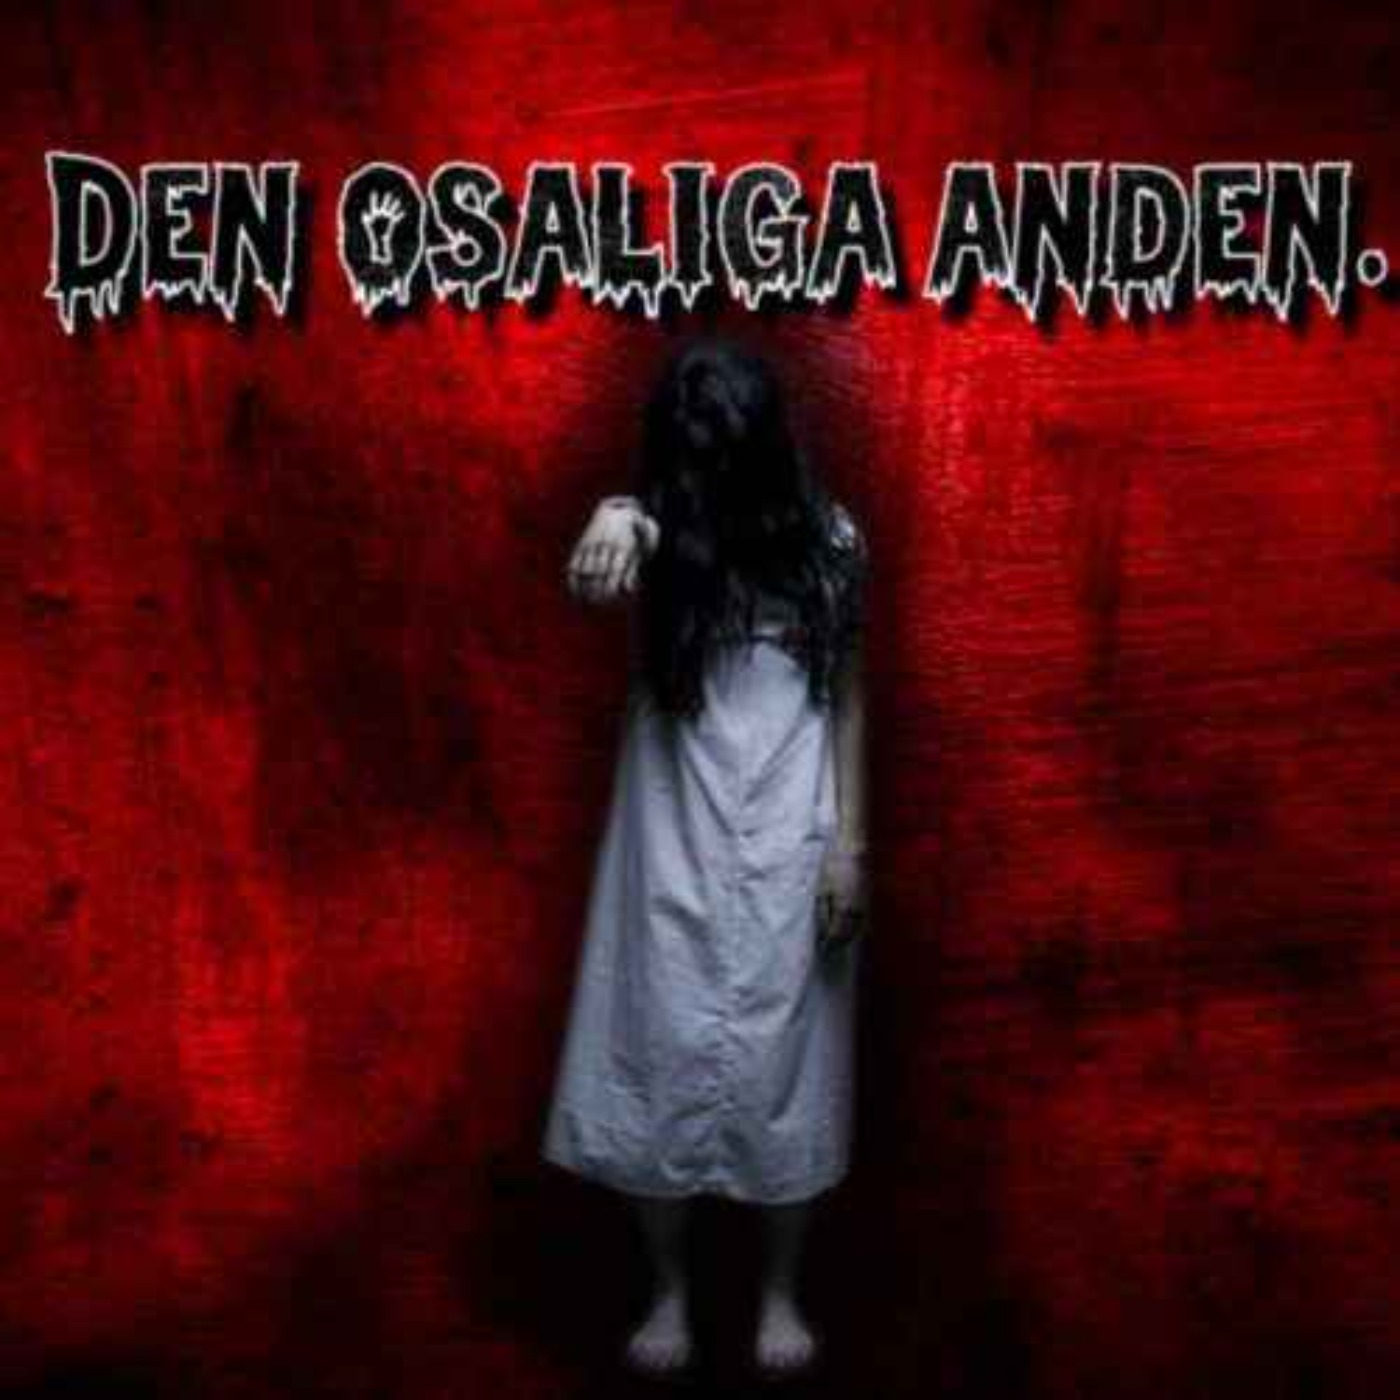 cover art for Den osaliga anden.